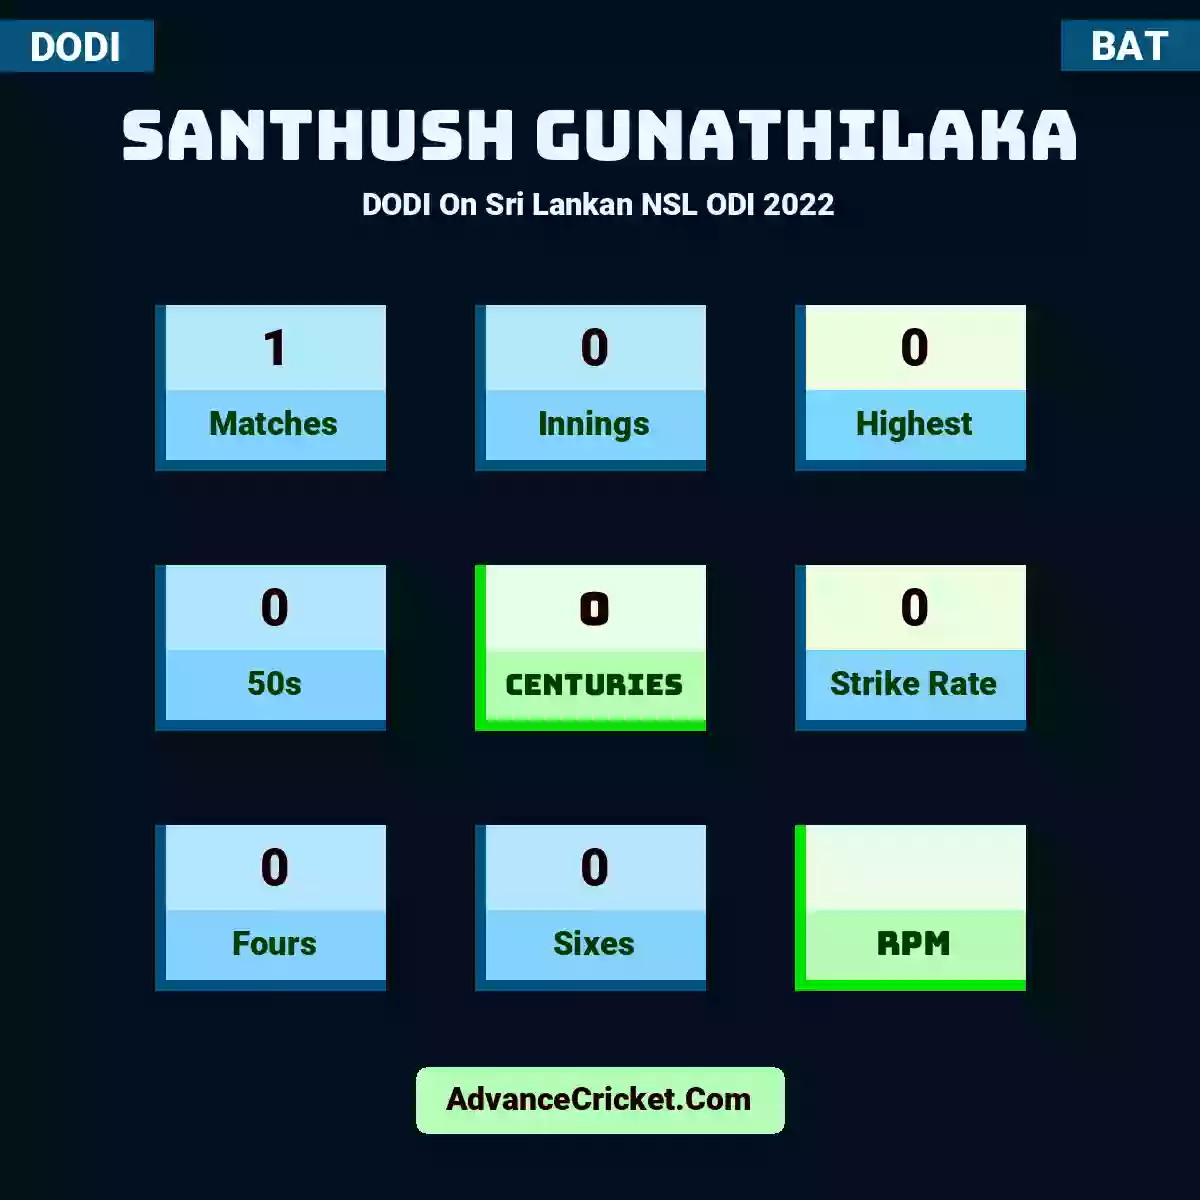 Santhush Gunathilaka DODI  On Sri Lankan NSL ODI 2022, Santhush Gunathilaka played 1 matches, scored 0 runs as highest, 0 half-centuries, and 0 centuries, with a strike rate of 0. S.Gunathilaka hit 0 fours and 0 sixes.